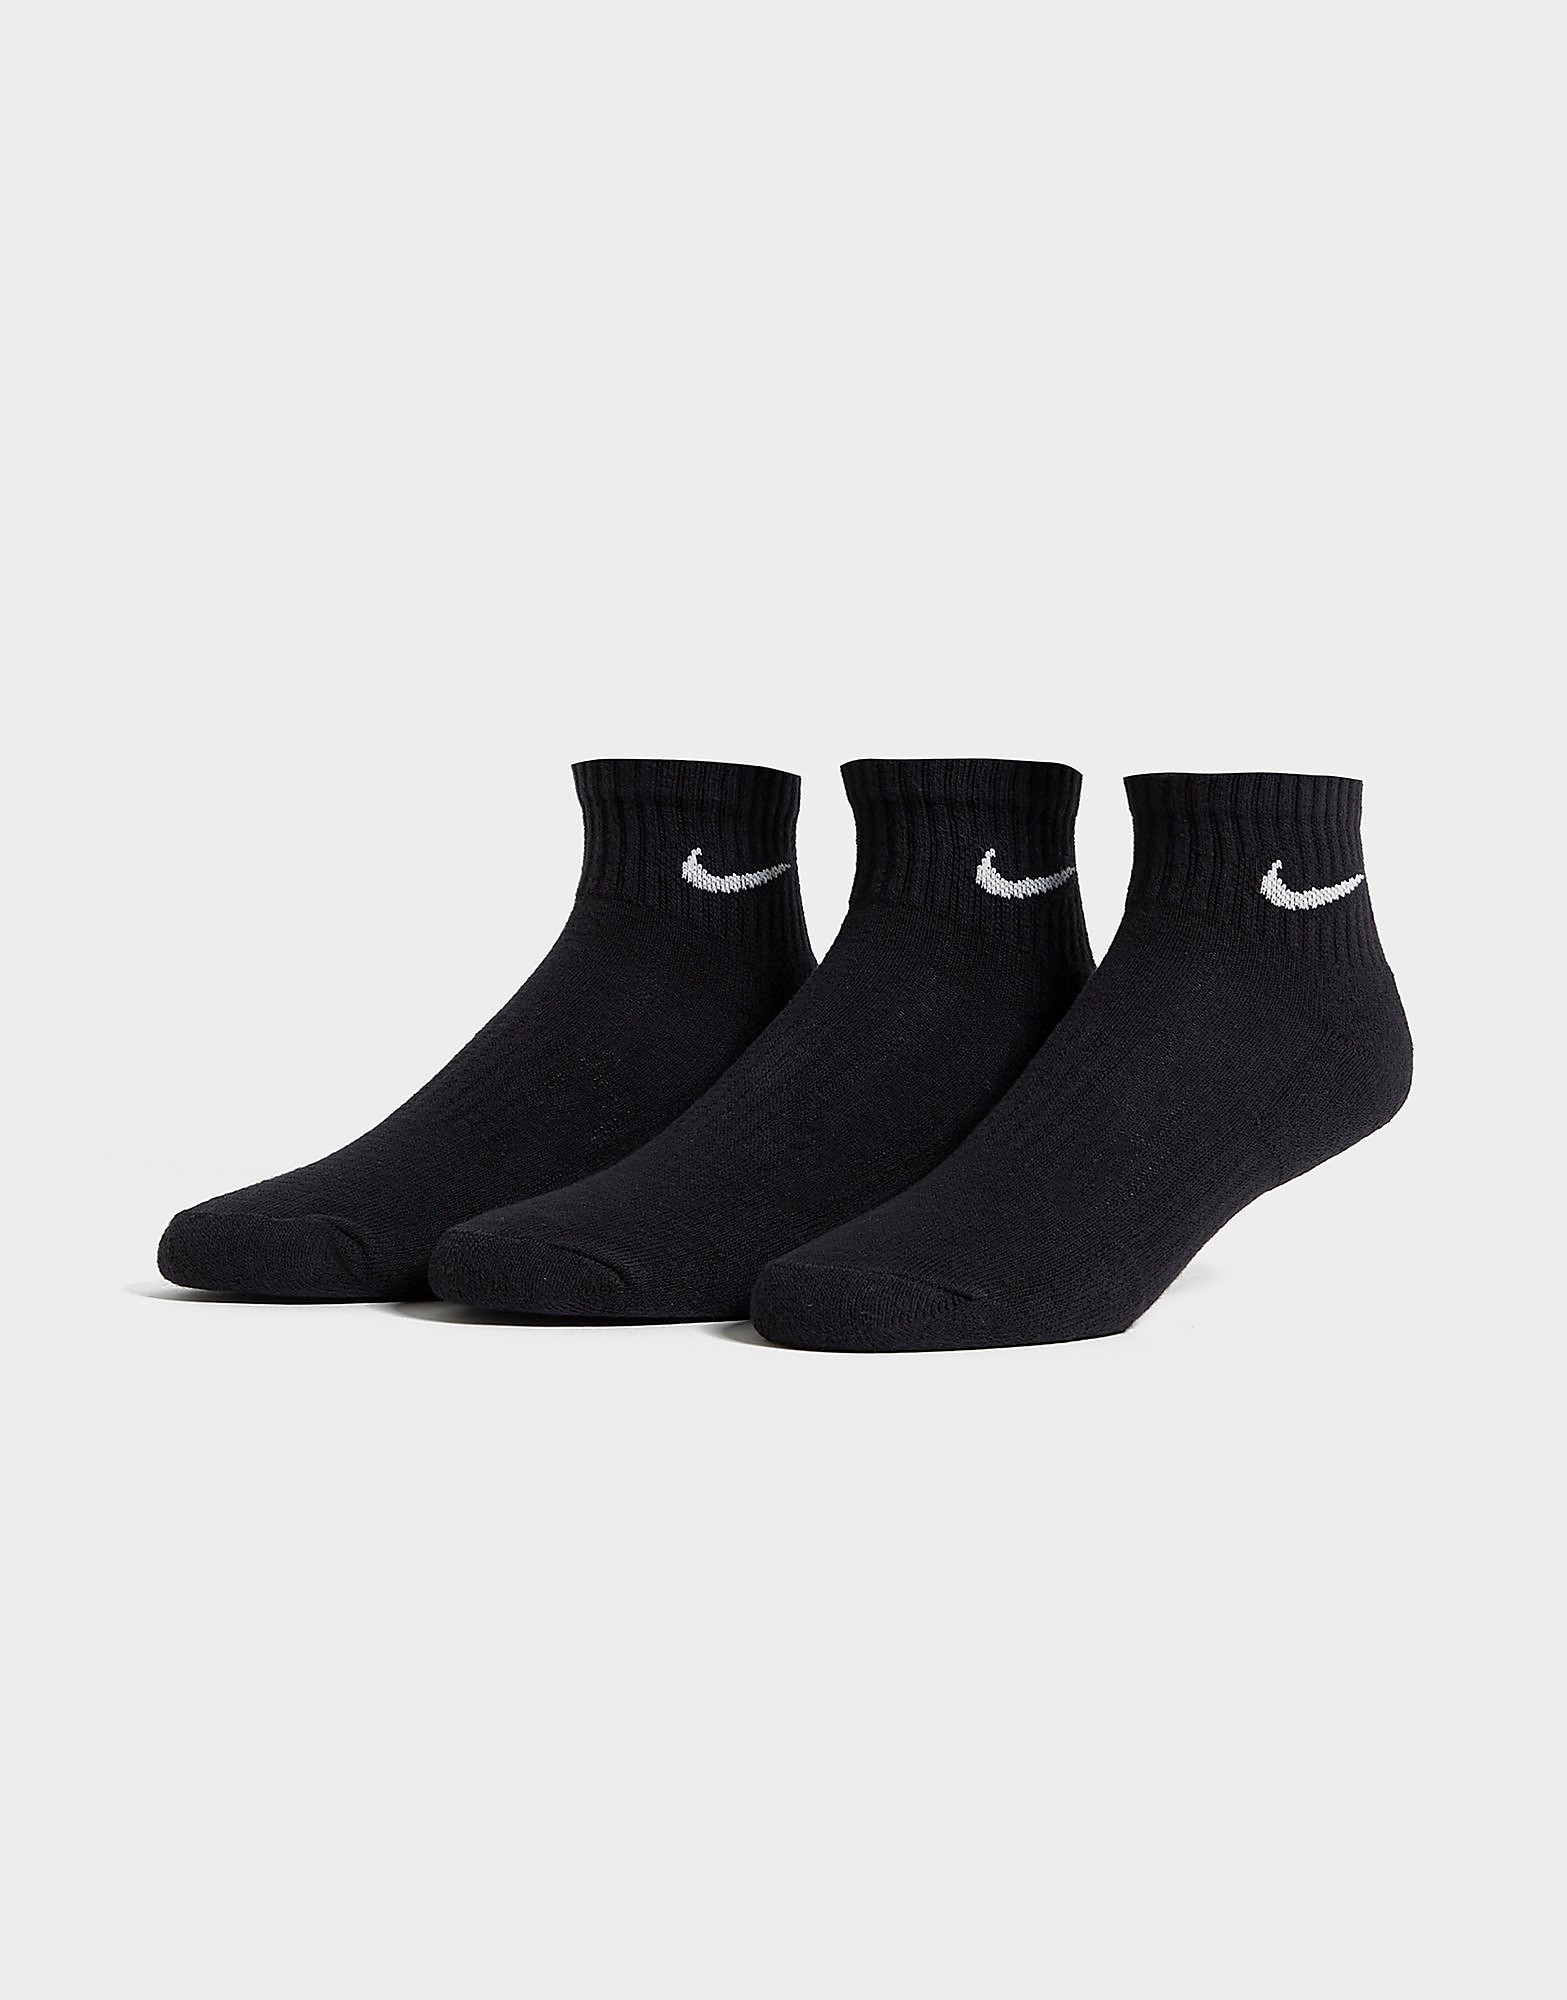 Nike pehmustetut sukat 3 kpl - mens, musta, nike